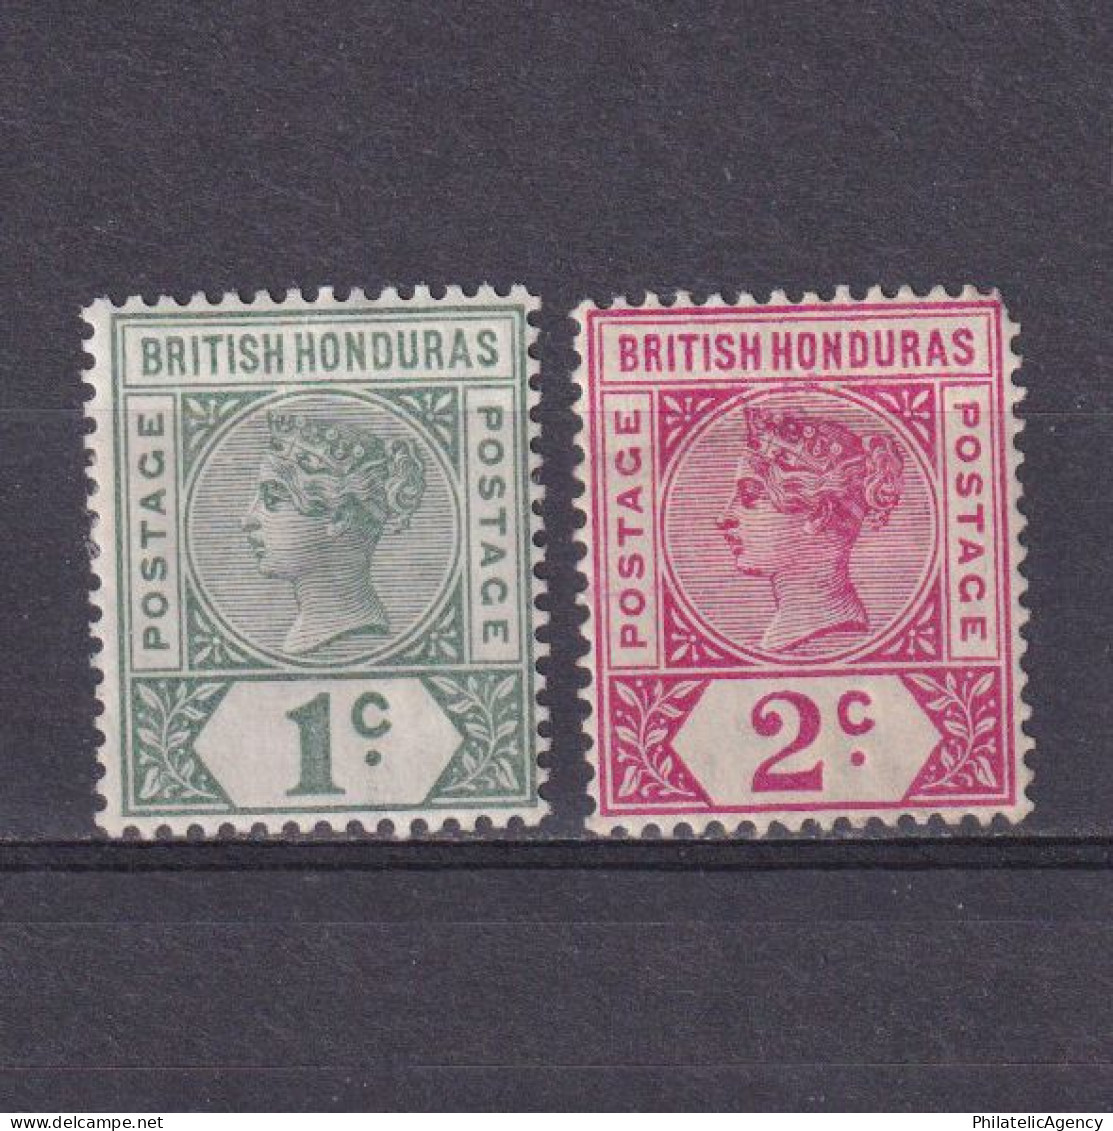 BRITISH HONDURAS 1891, SG #51-52, Part Set, Queen Victoria, MH - British Honduras (...-1970)